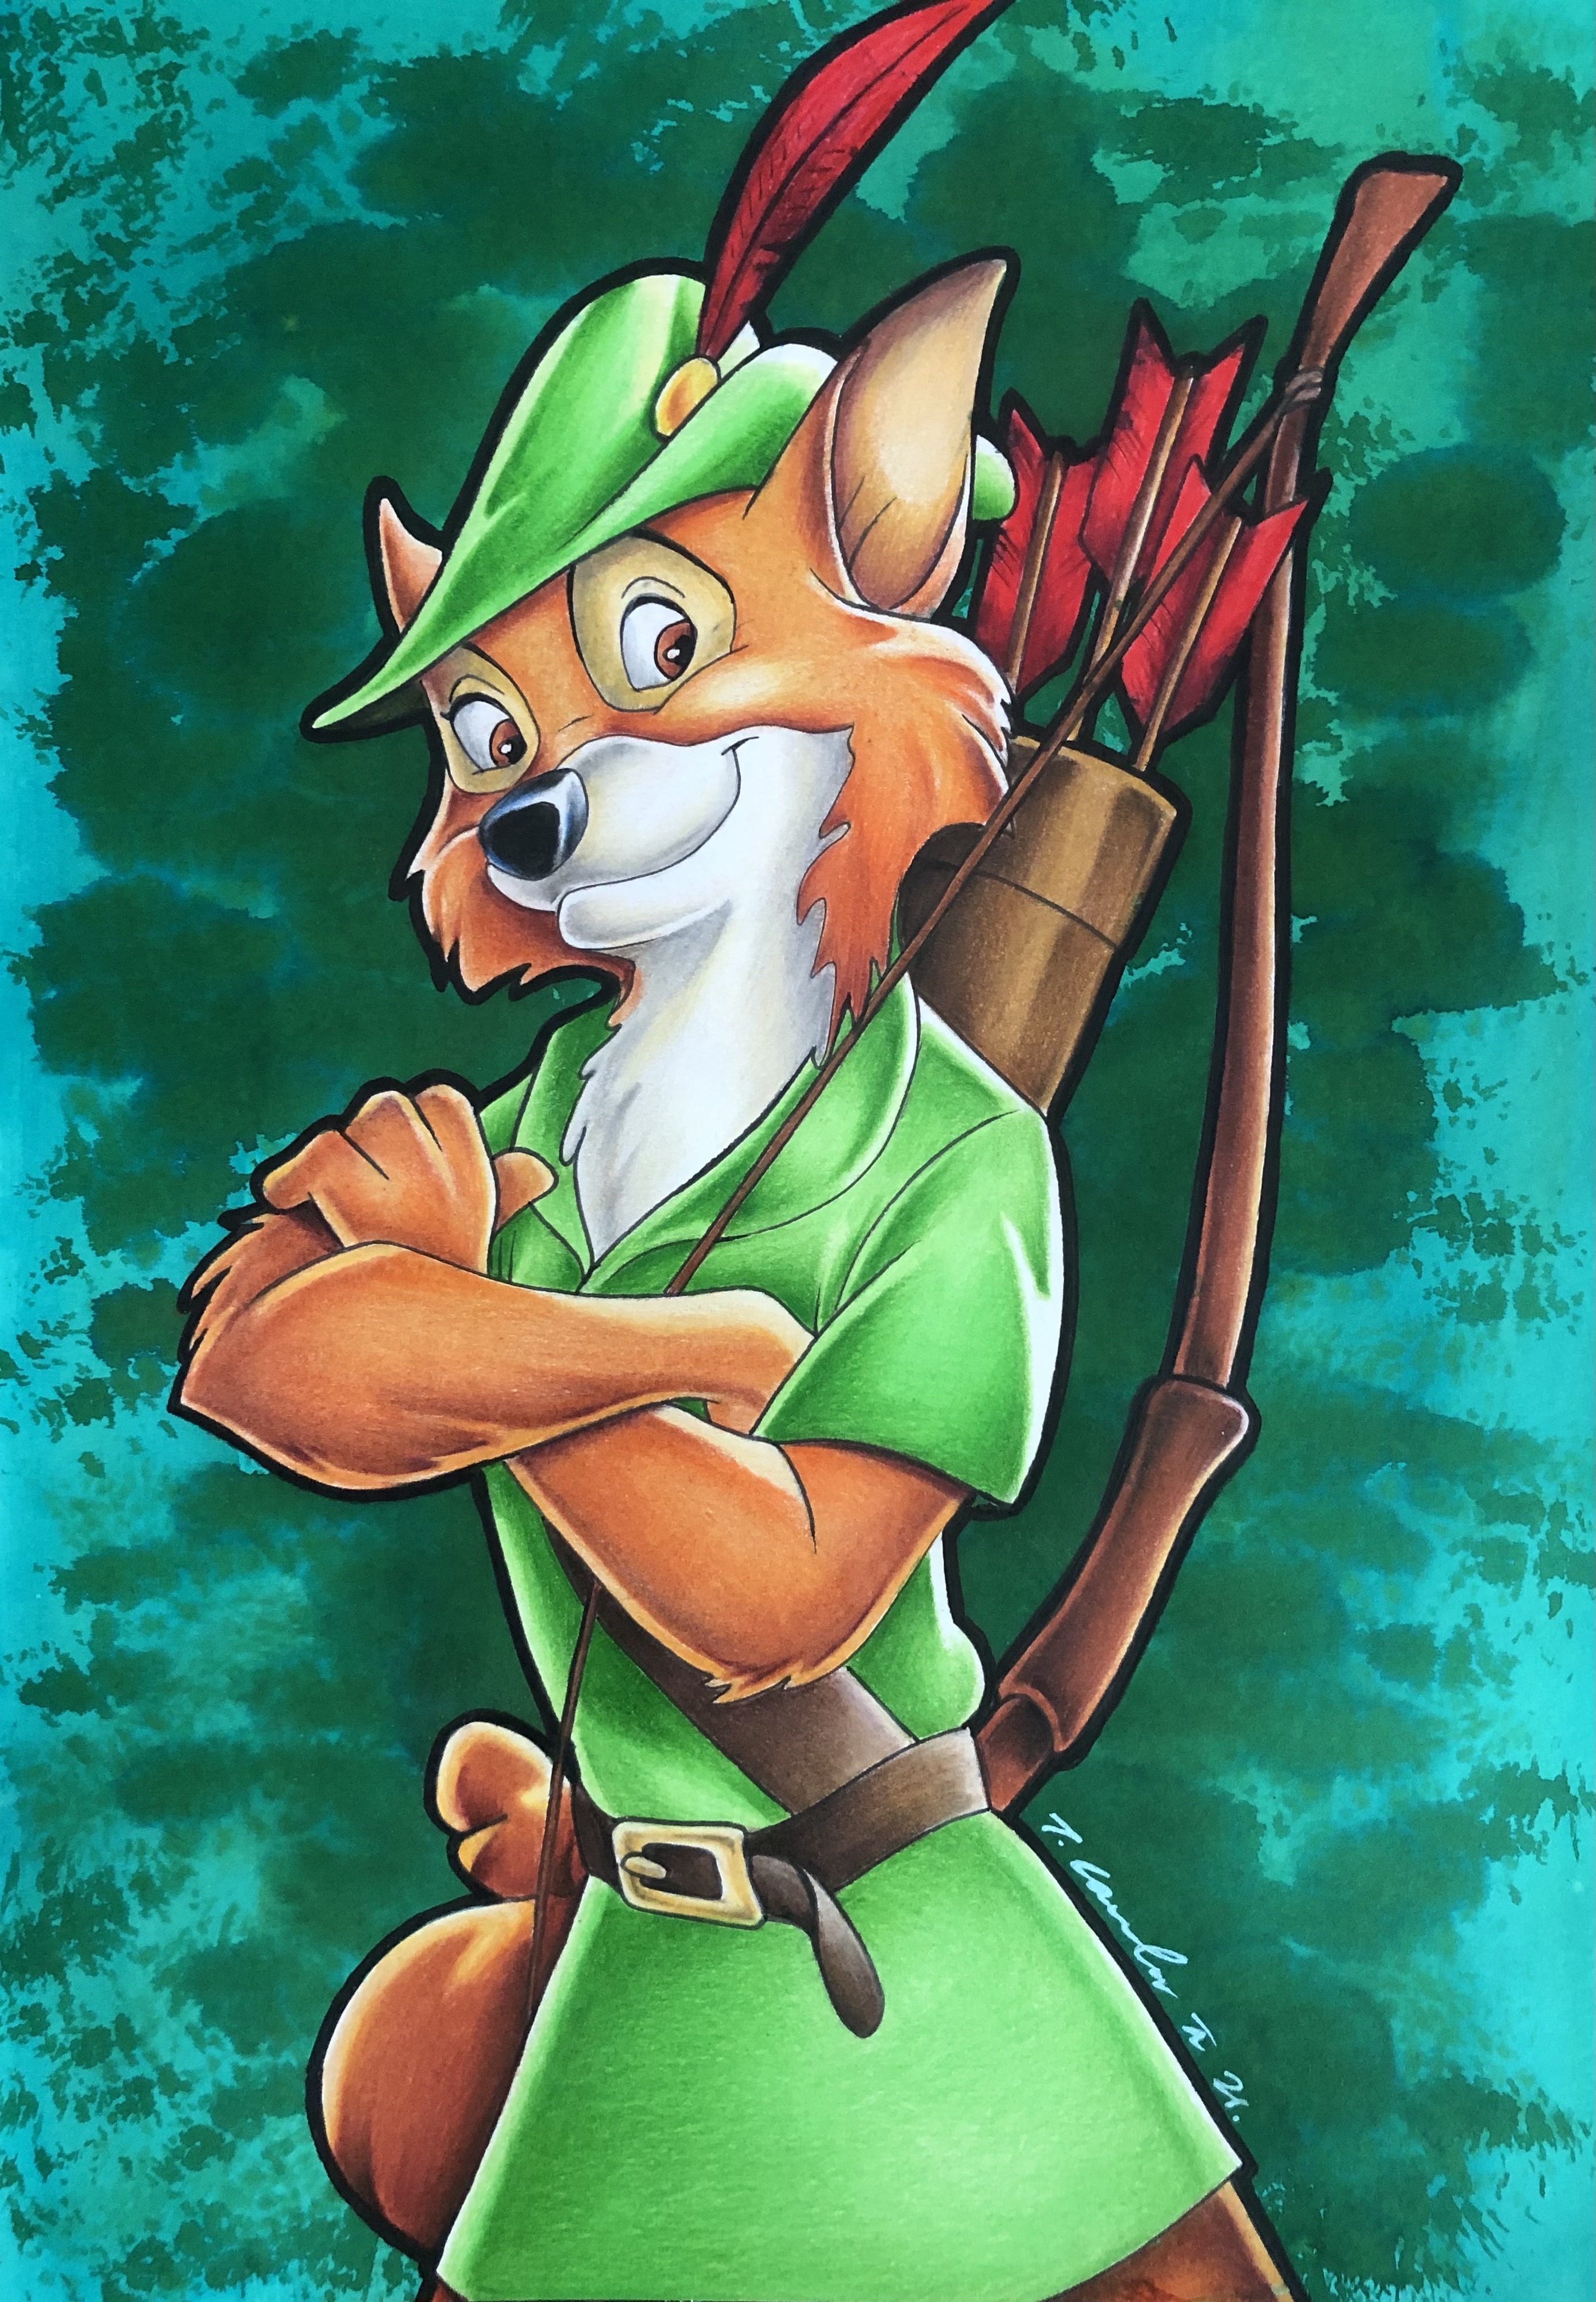 Disney Robin Hood by billyboyuk on DeviantArt